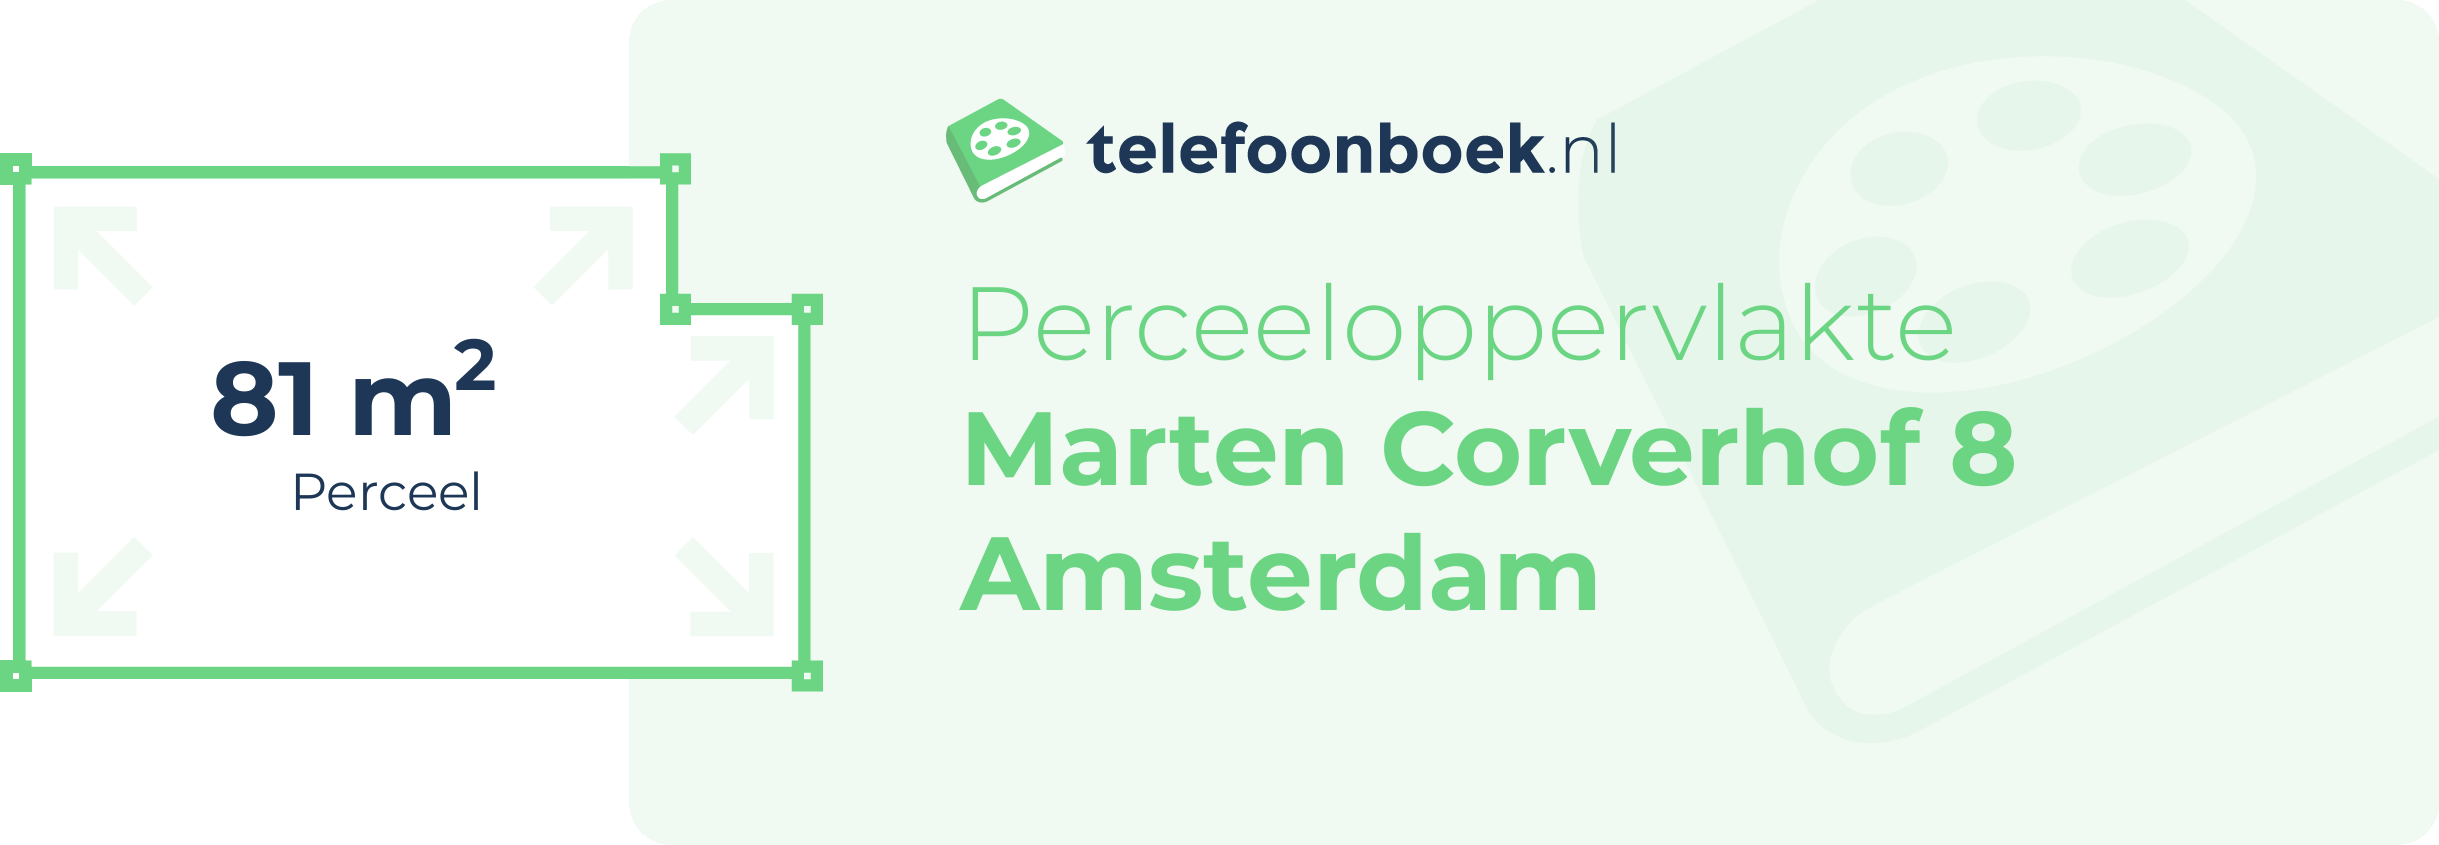 Perceeloppervlakte Marten Corverhof 8 Amsterdam